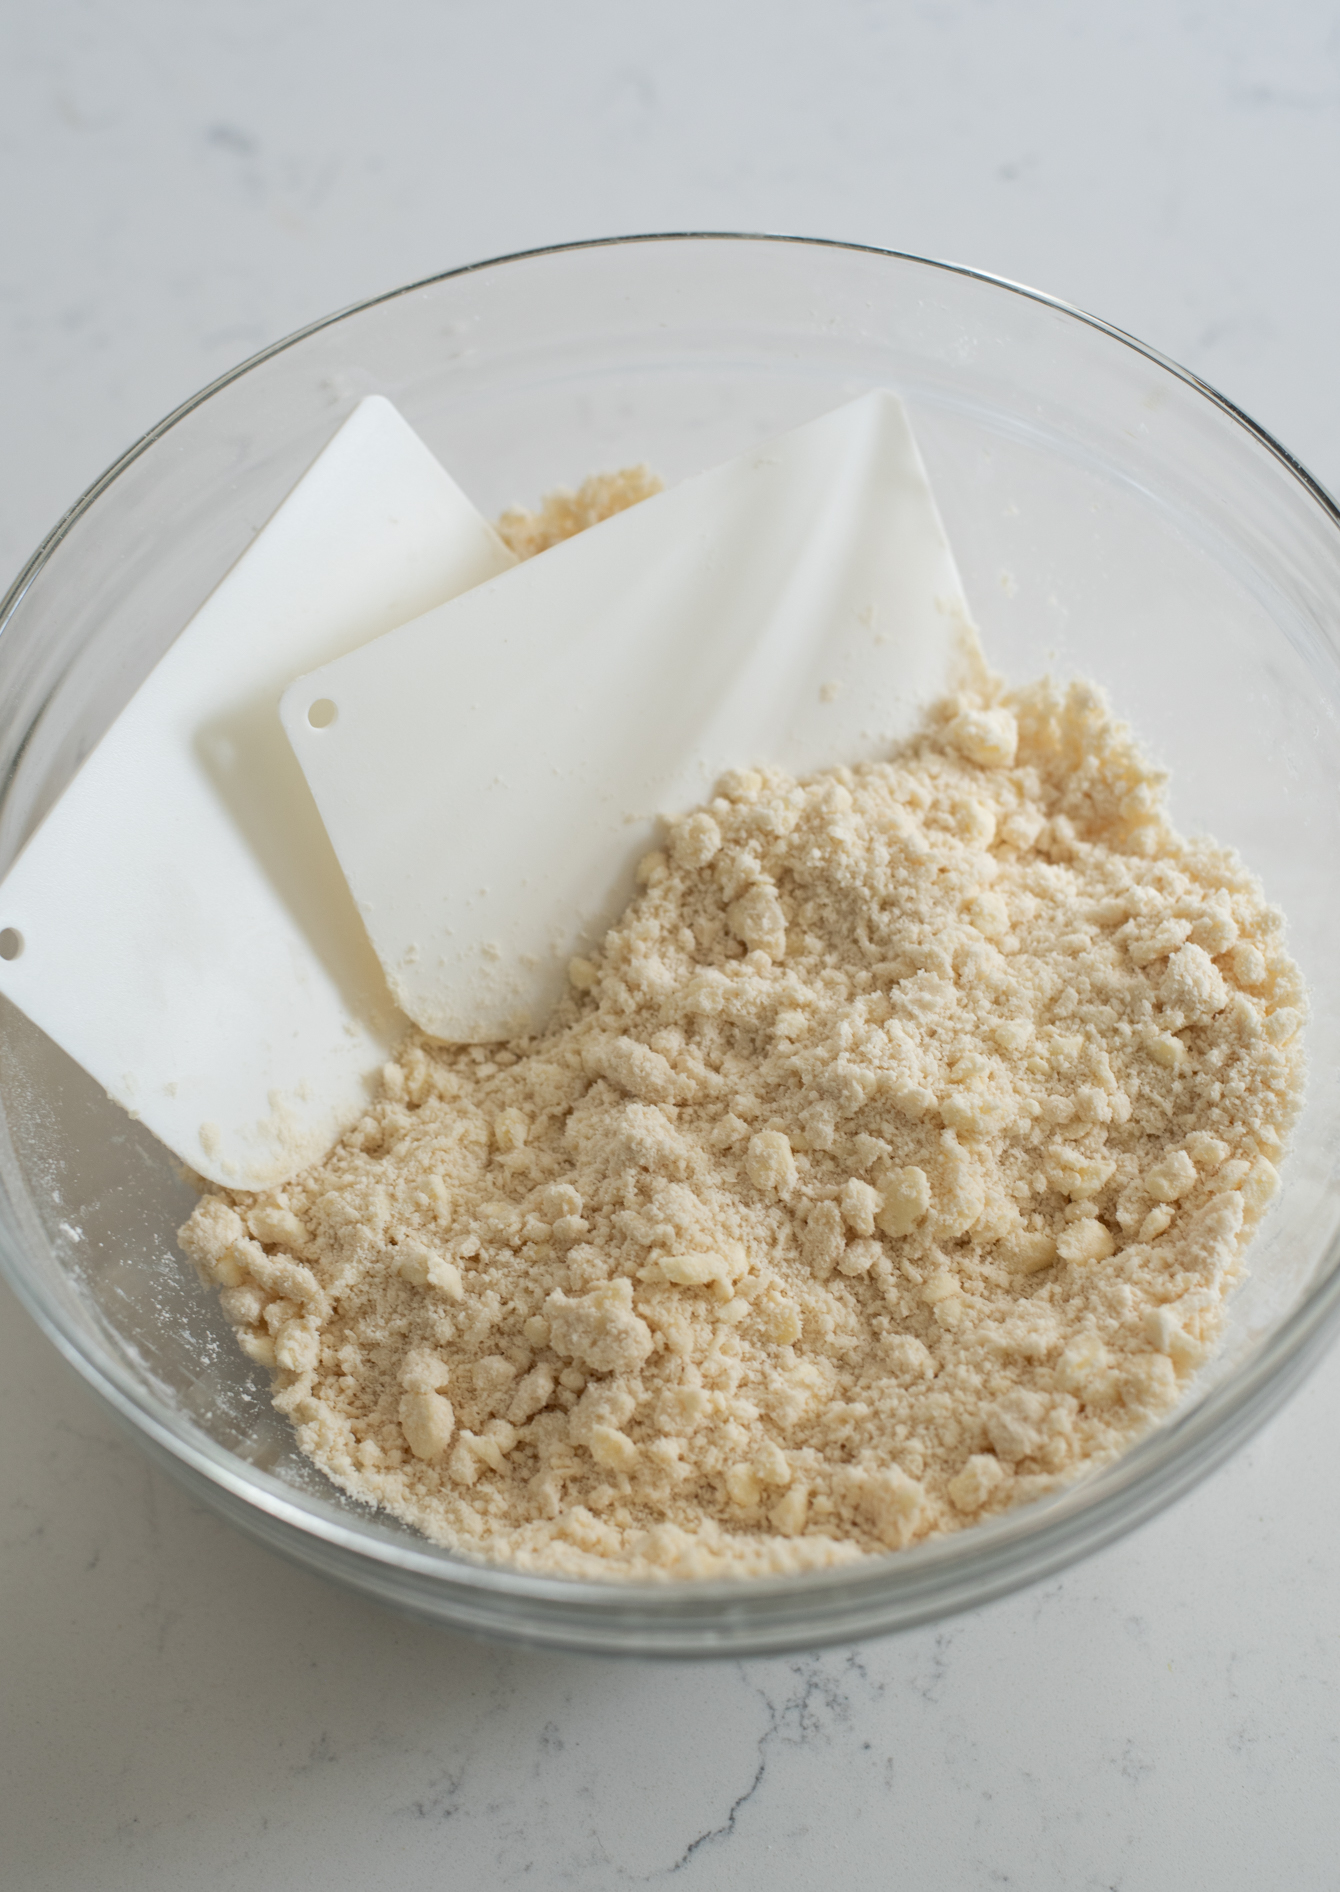 Pie crust dough is blended to coarse crumb mixture using dough scrapers.